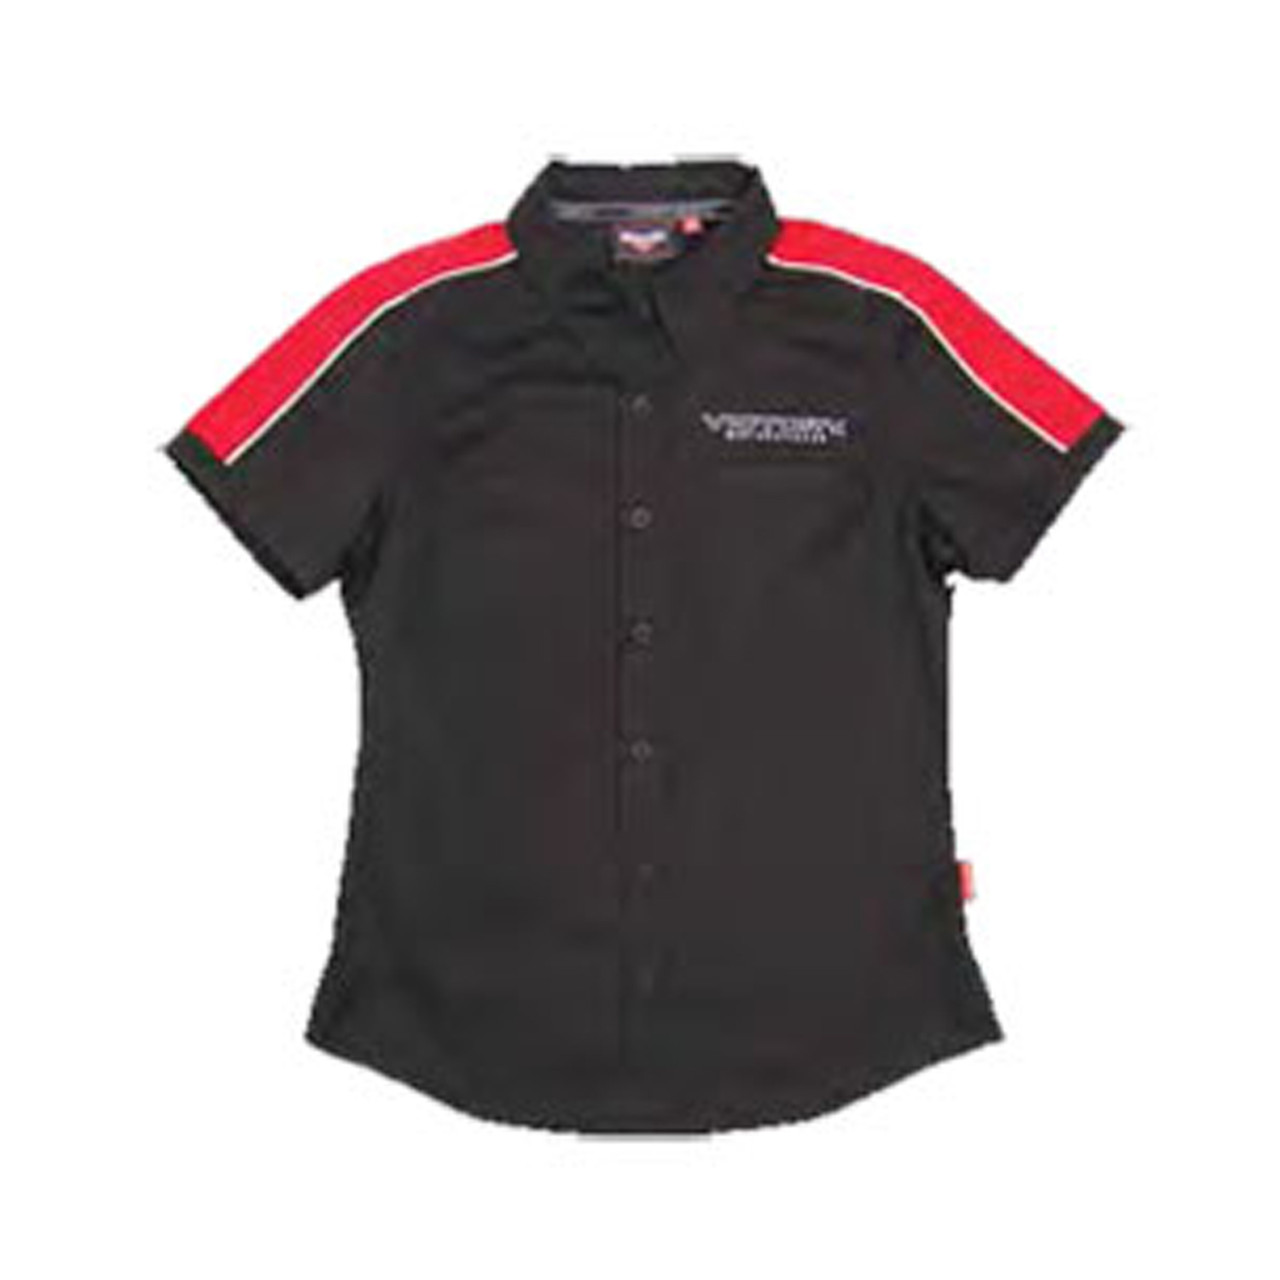 Victory Motorcycle New OEM Women's Red & Black Dealer Pit Shirt, SM, 286359902